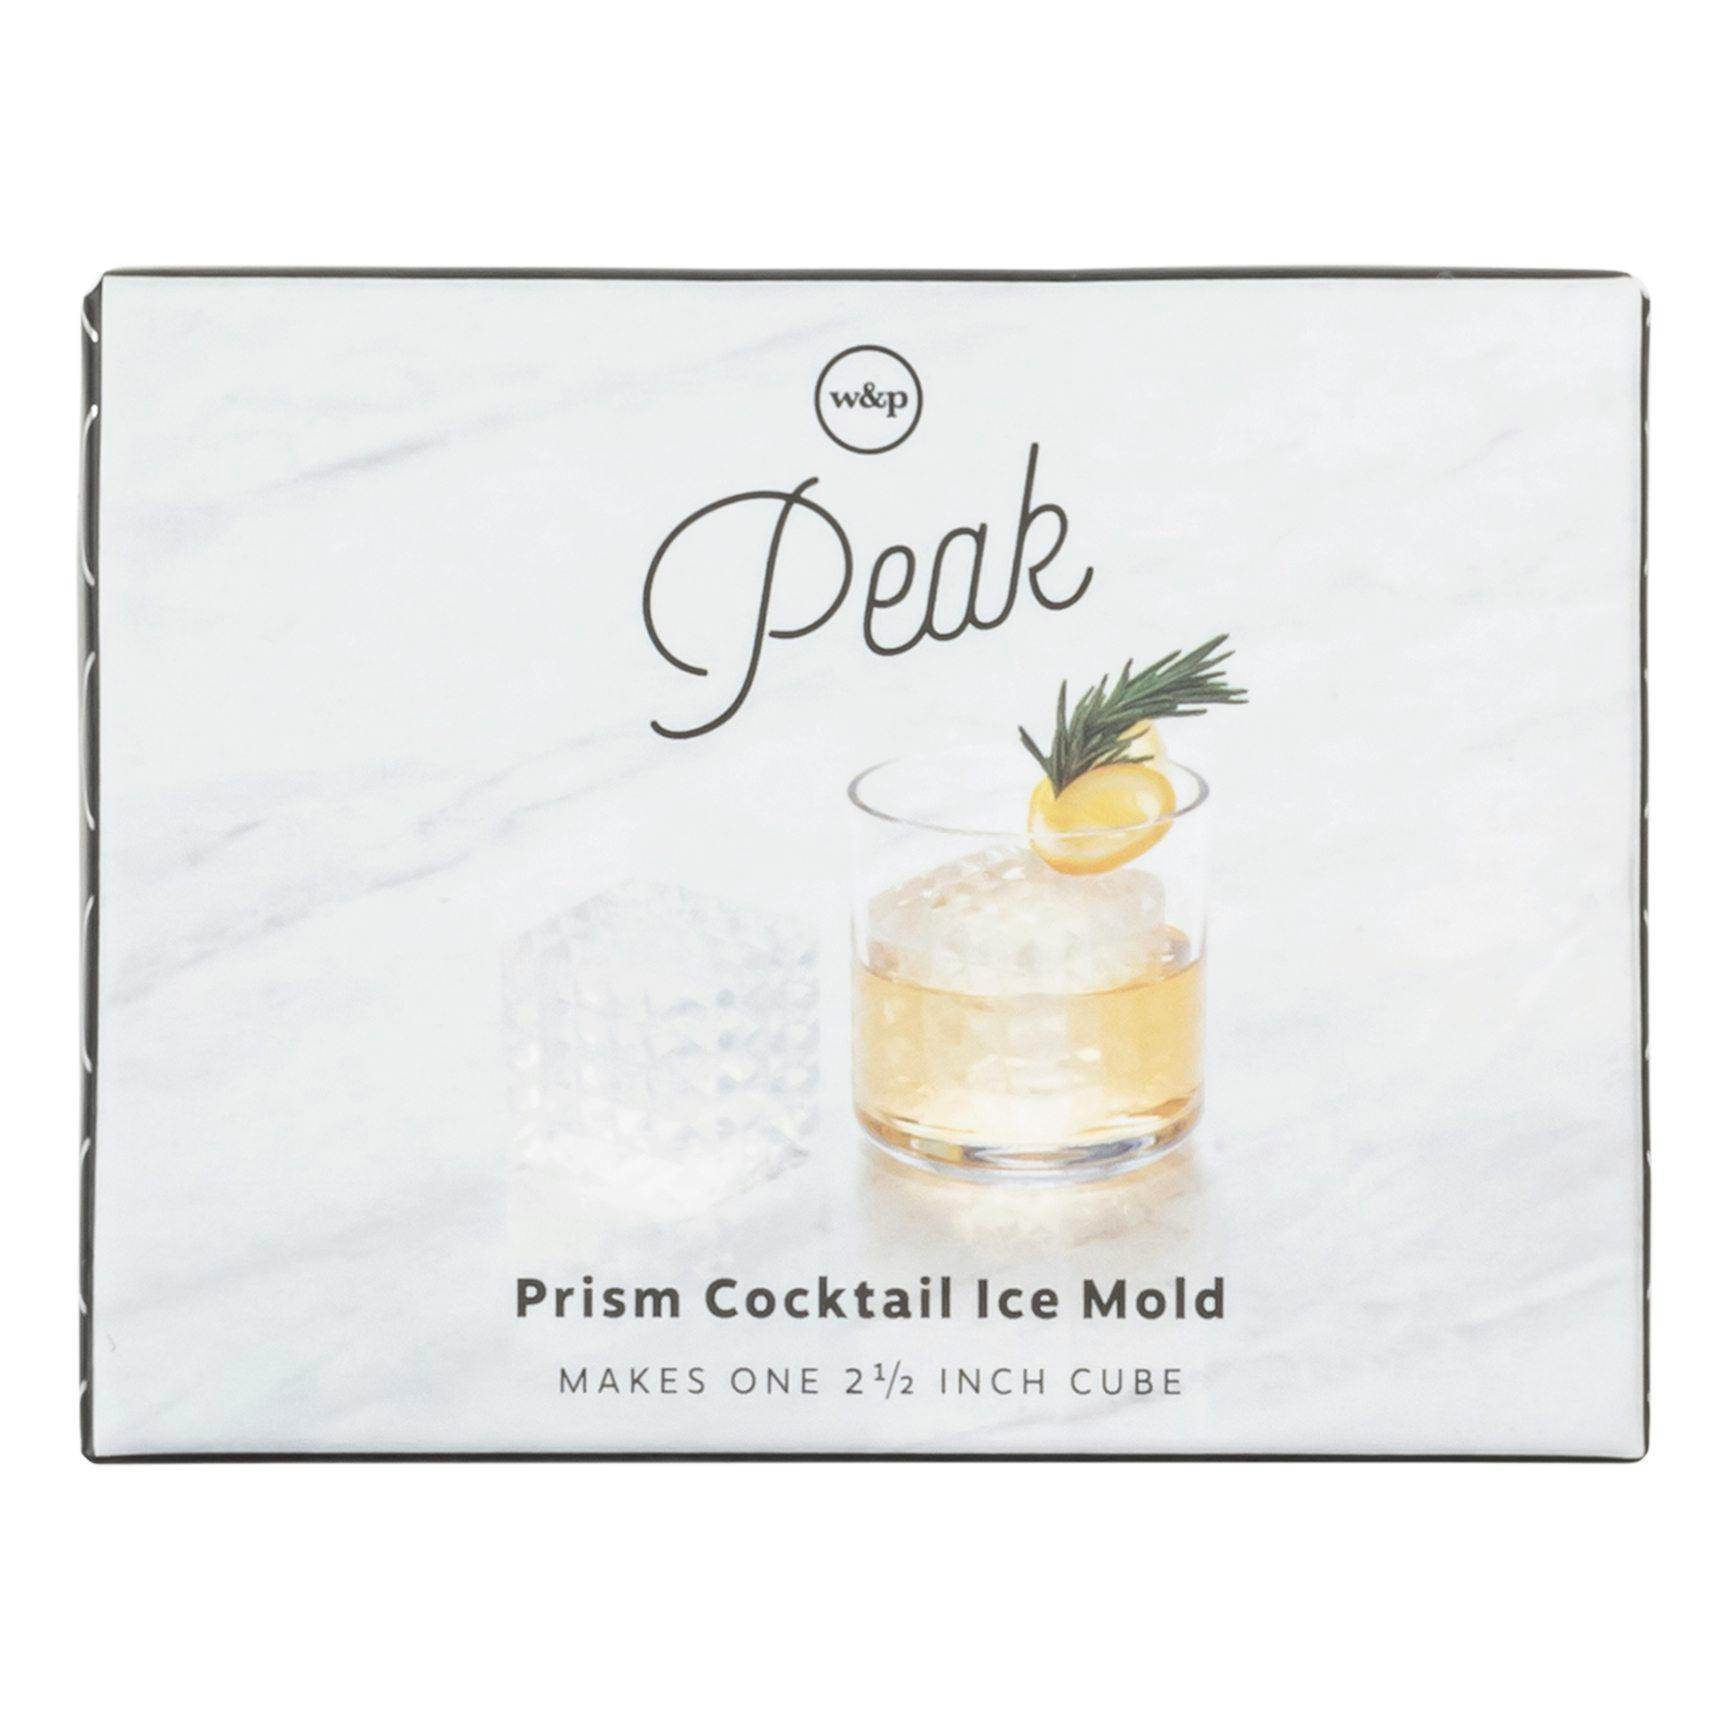 Peak Prism Cocktail Ice Mold